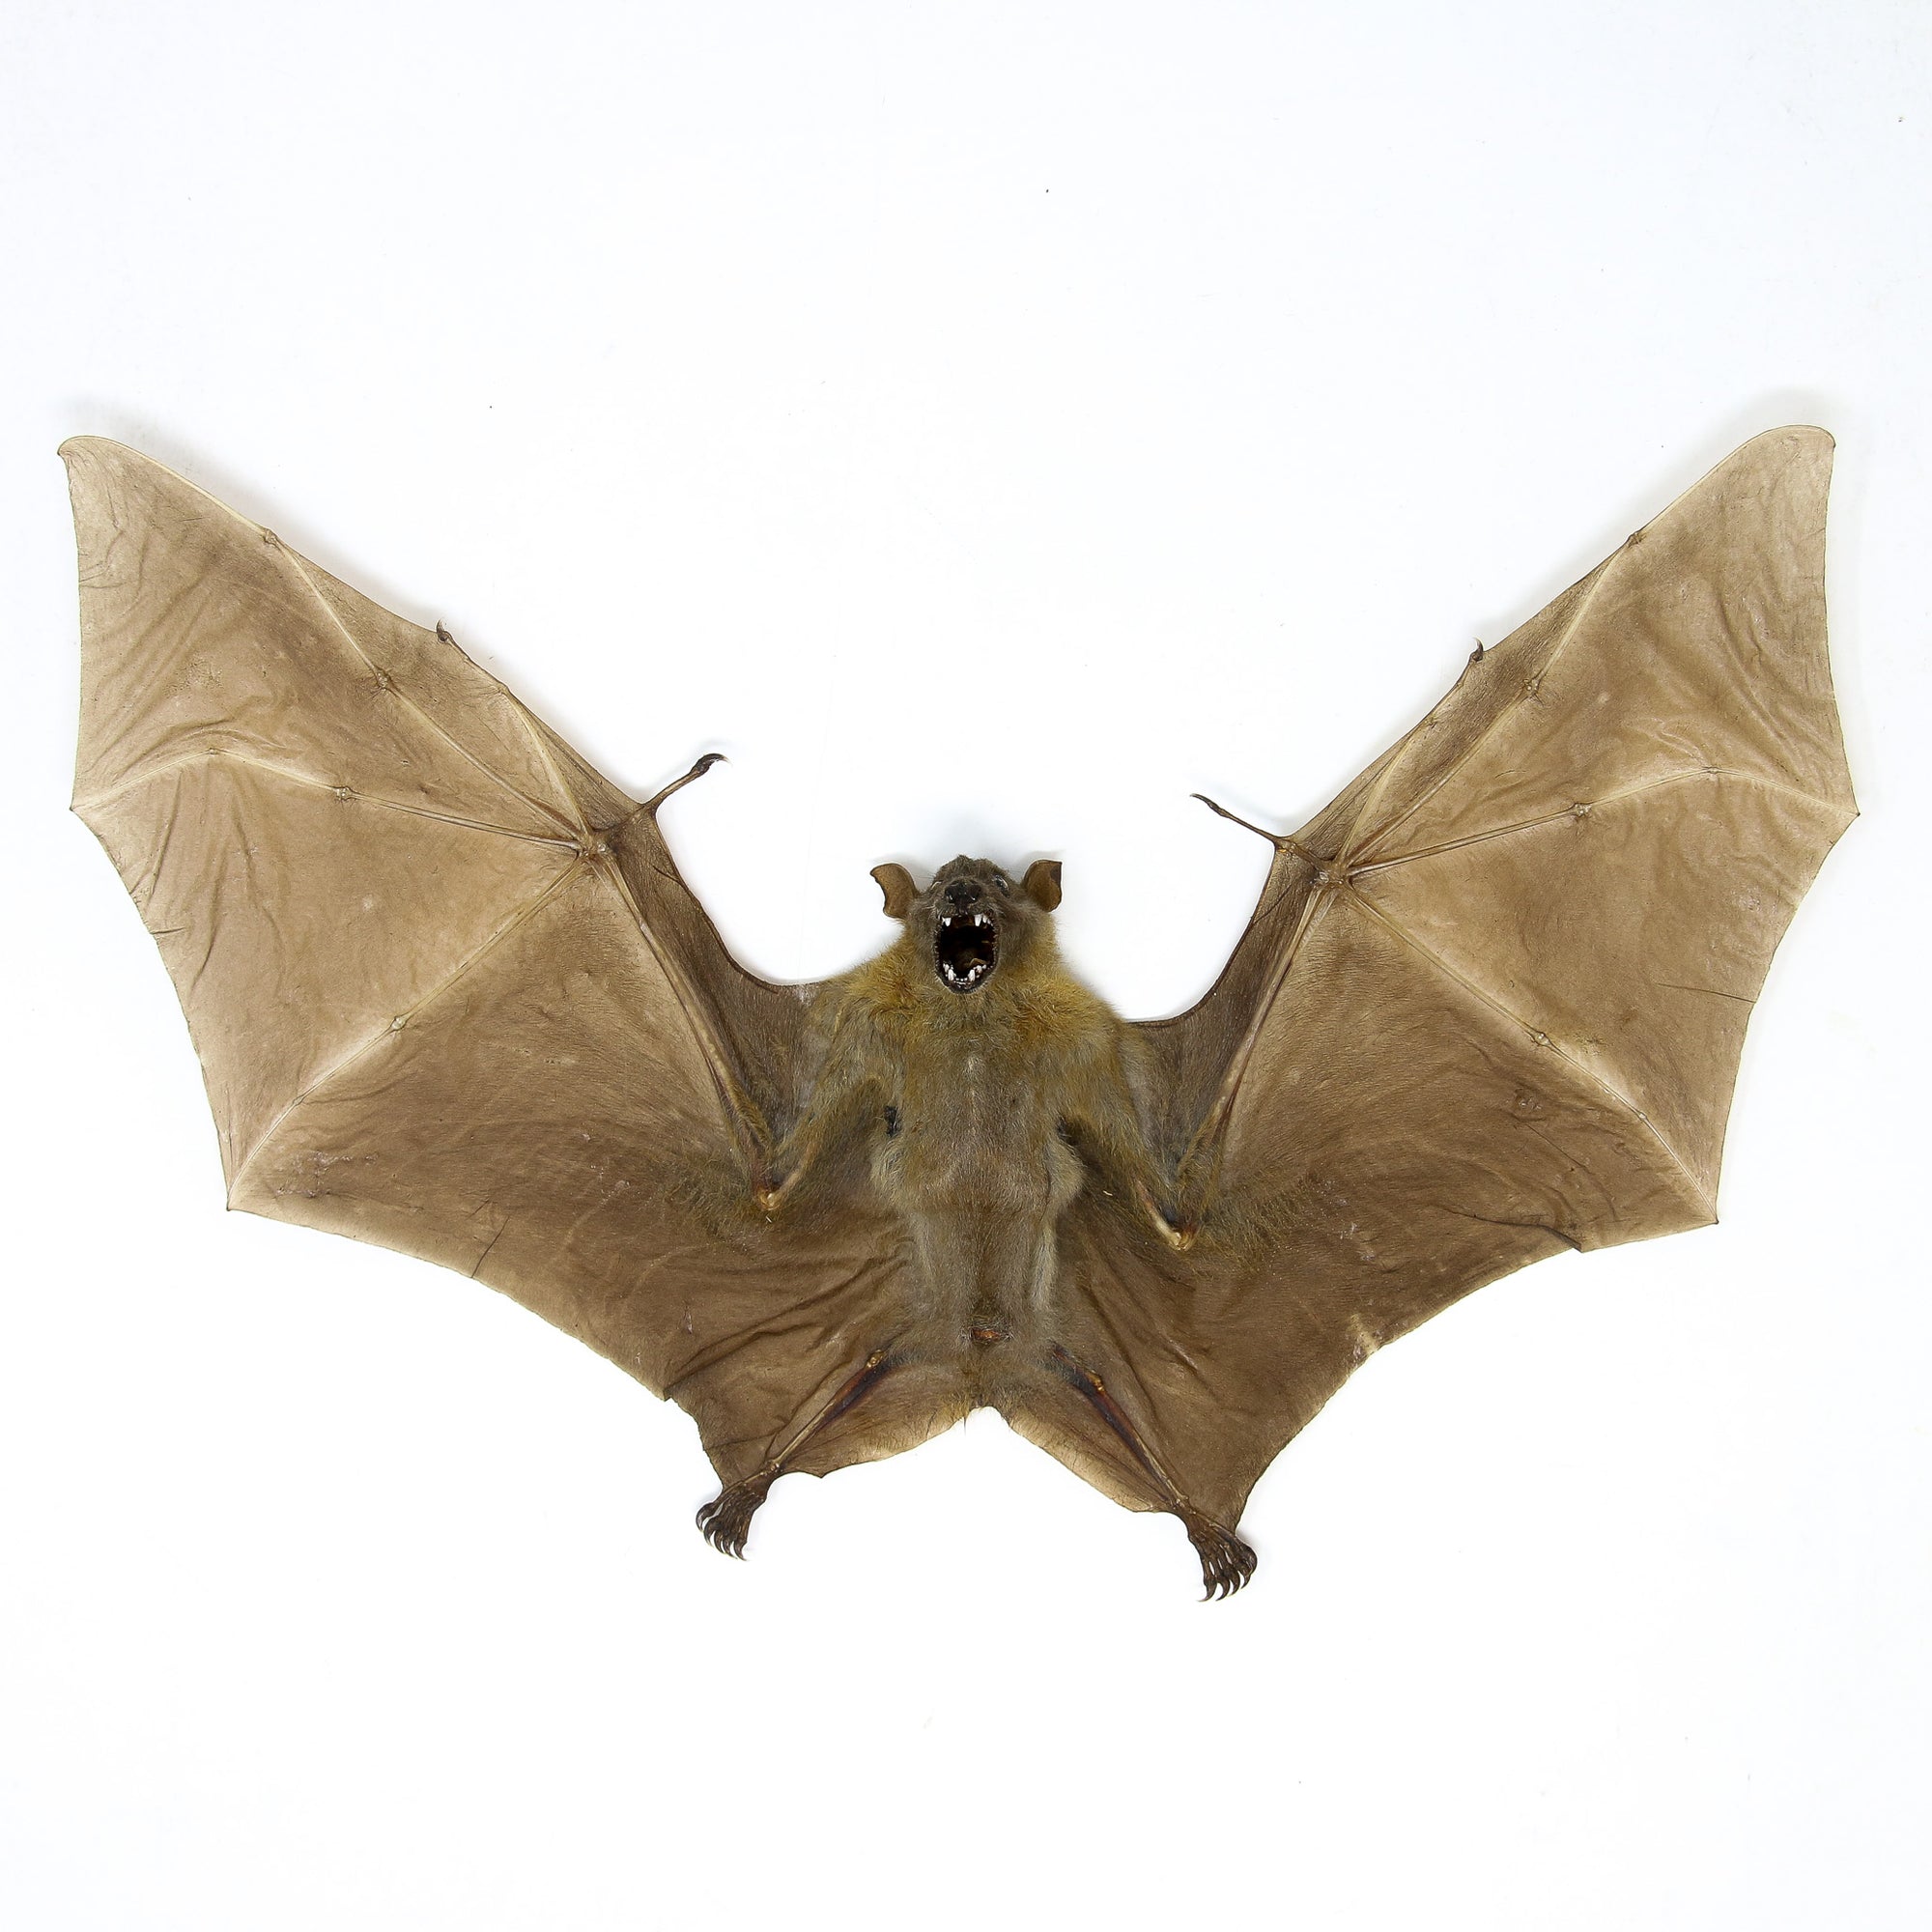 Minute Fruit Bat (Cynopterus minutus) A1 Spread Specimen